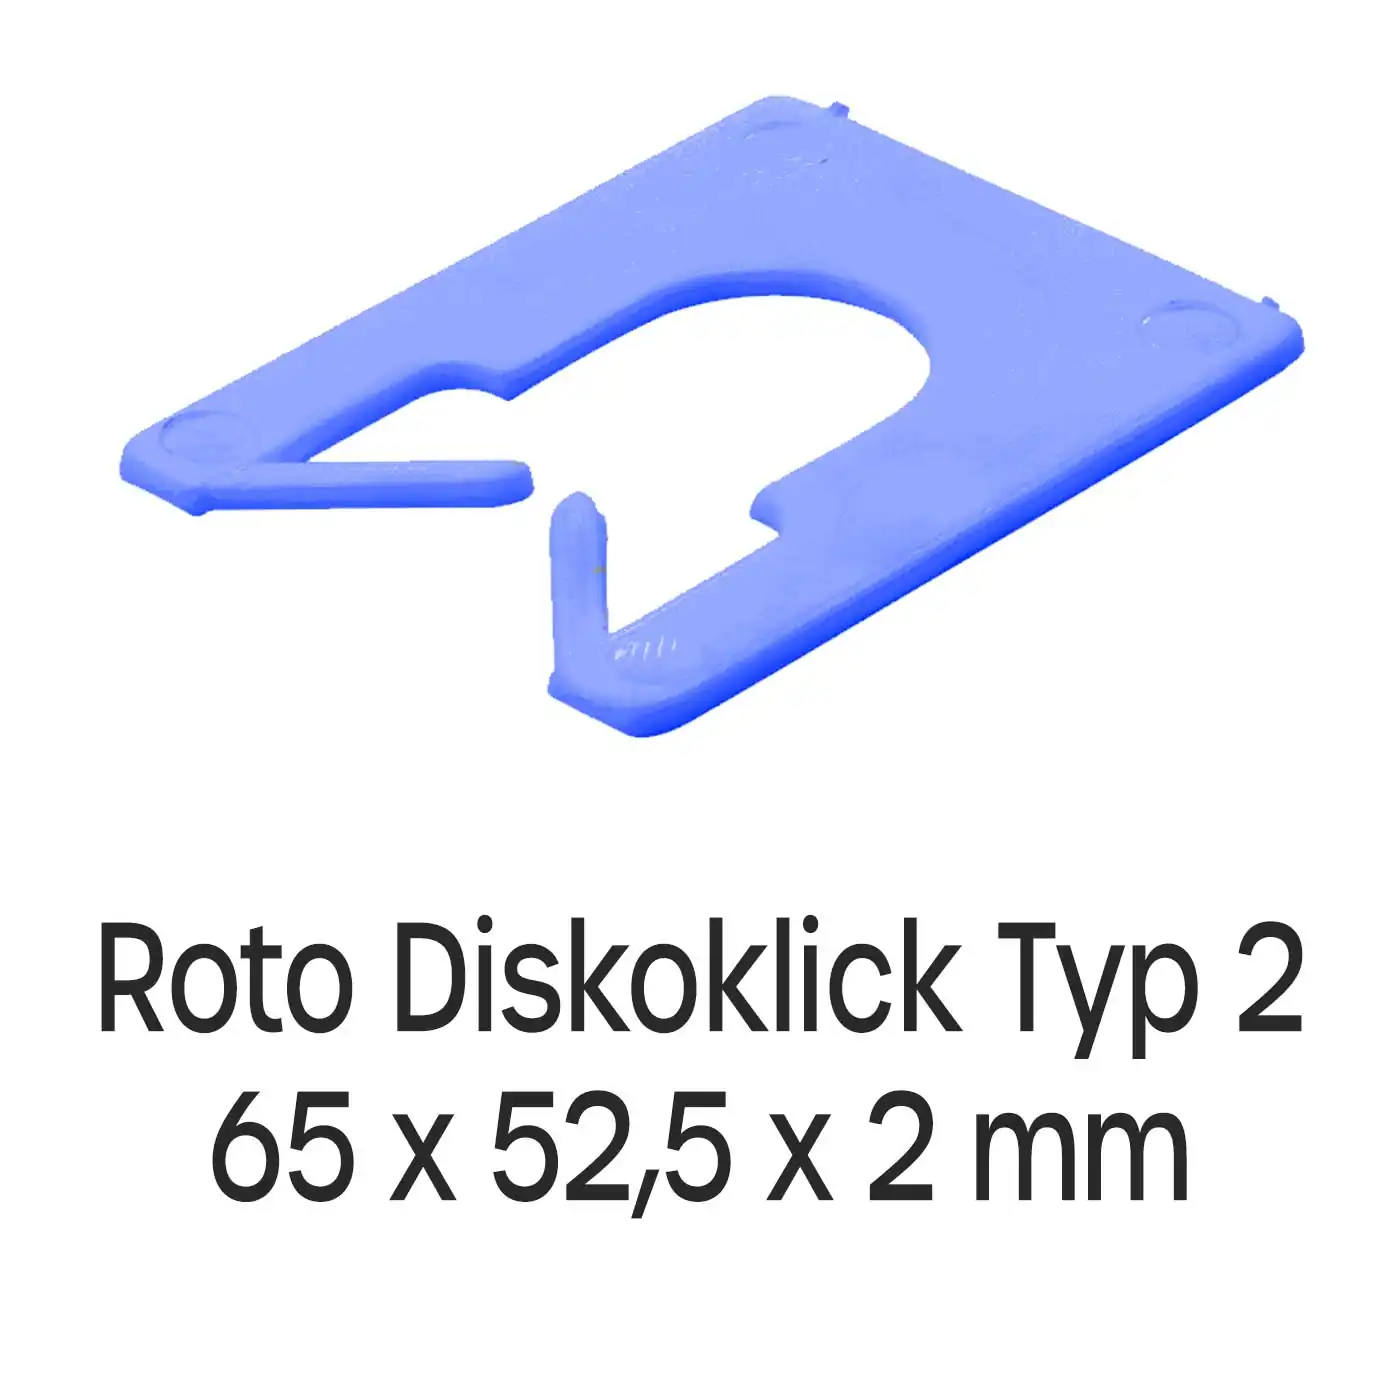 Distanzplatten Roto Diskoklick Typ 2 65 x 52,5 x 2 mm 1000 Stück